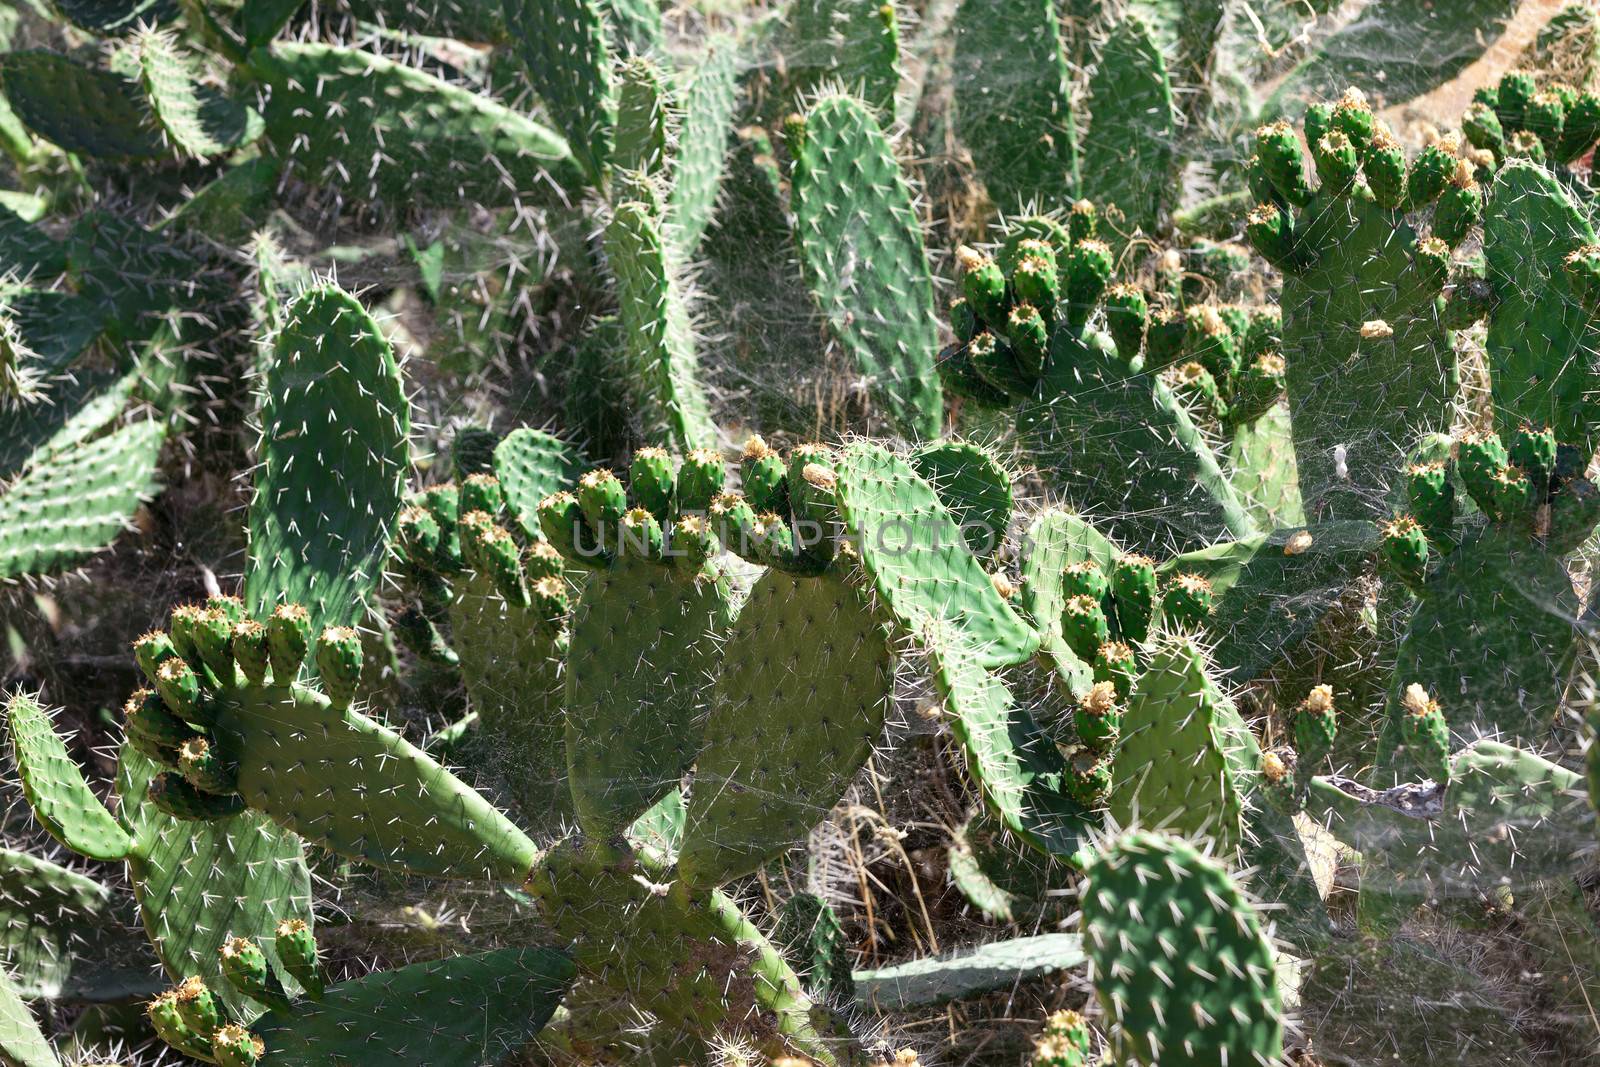 Bush green prickly cactus with spider web, closeup